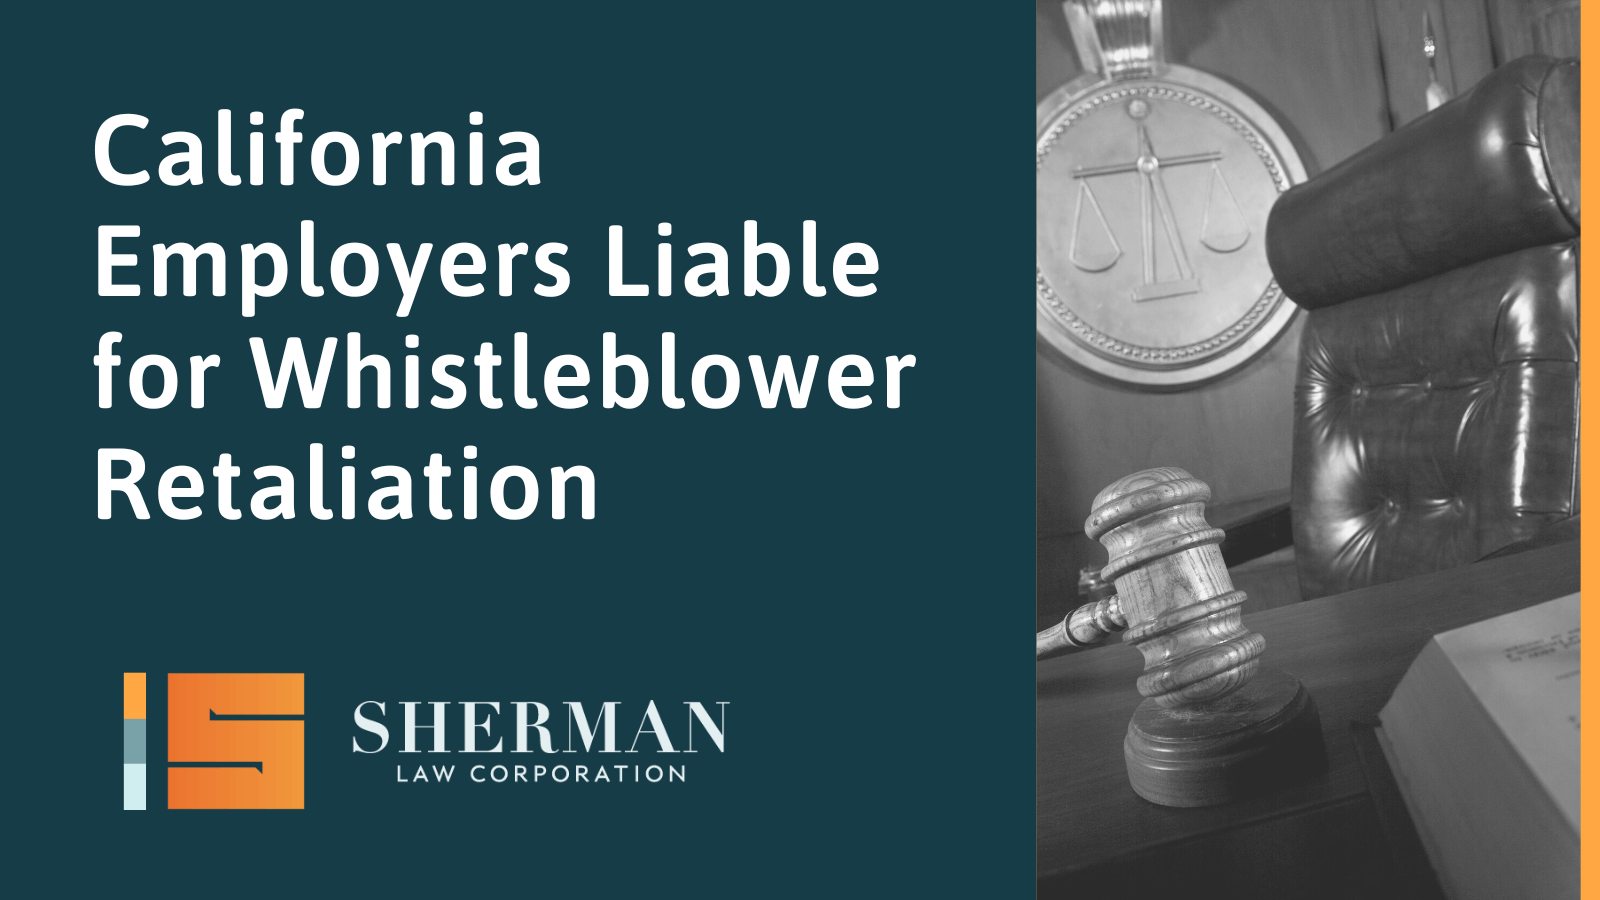 California Employers Liable for Whistleblower Retaliation - callifornia employment law - sherman law corporation